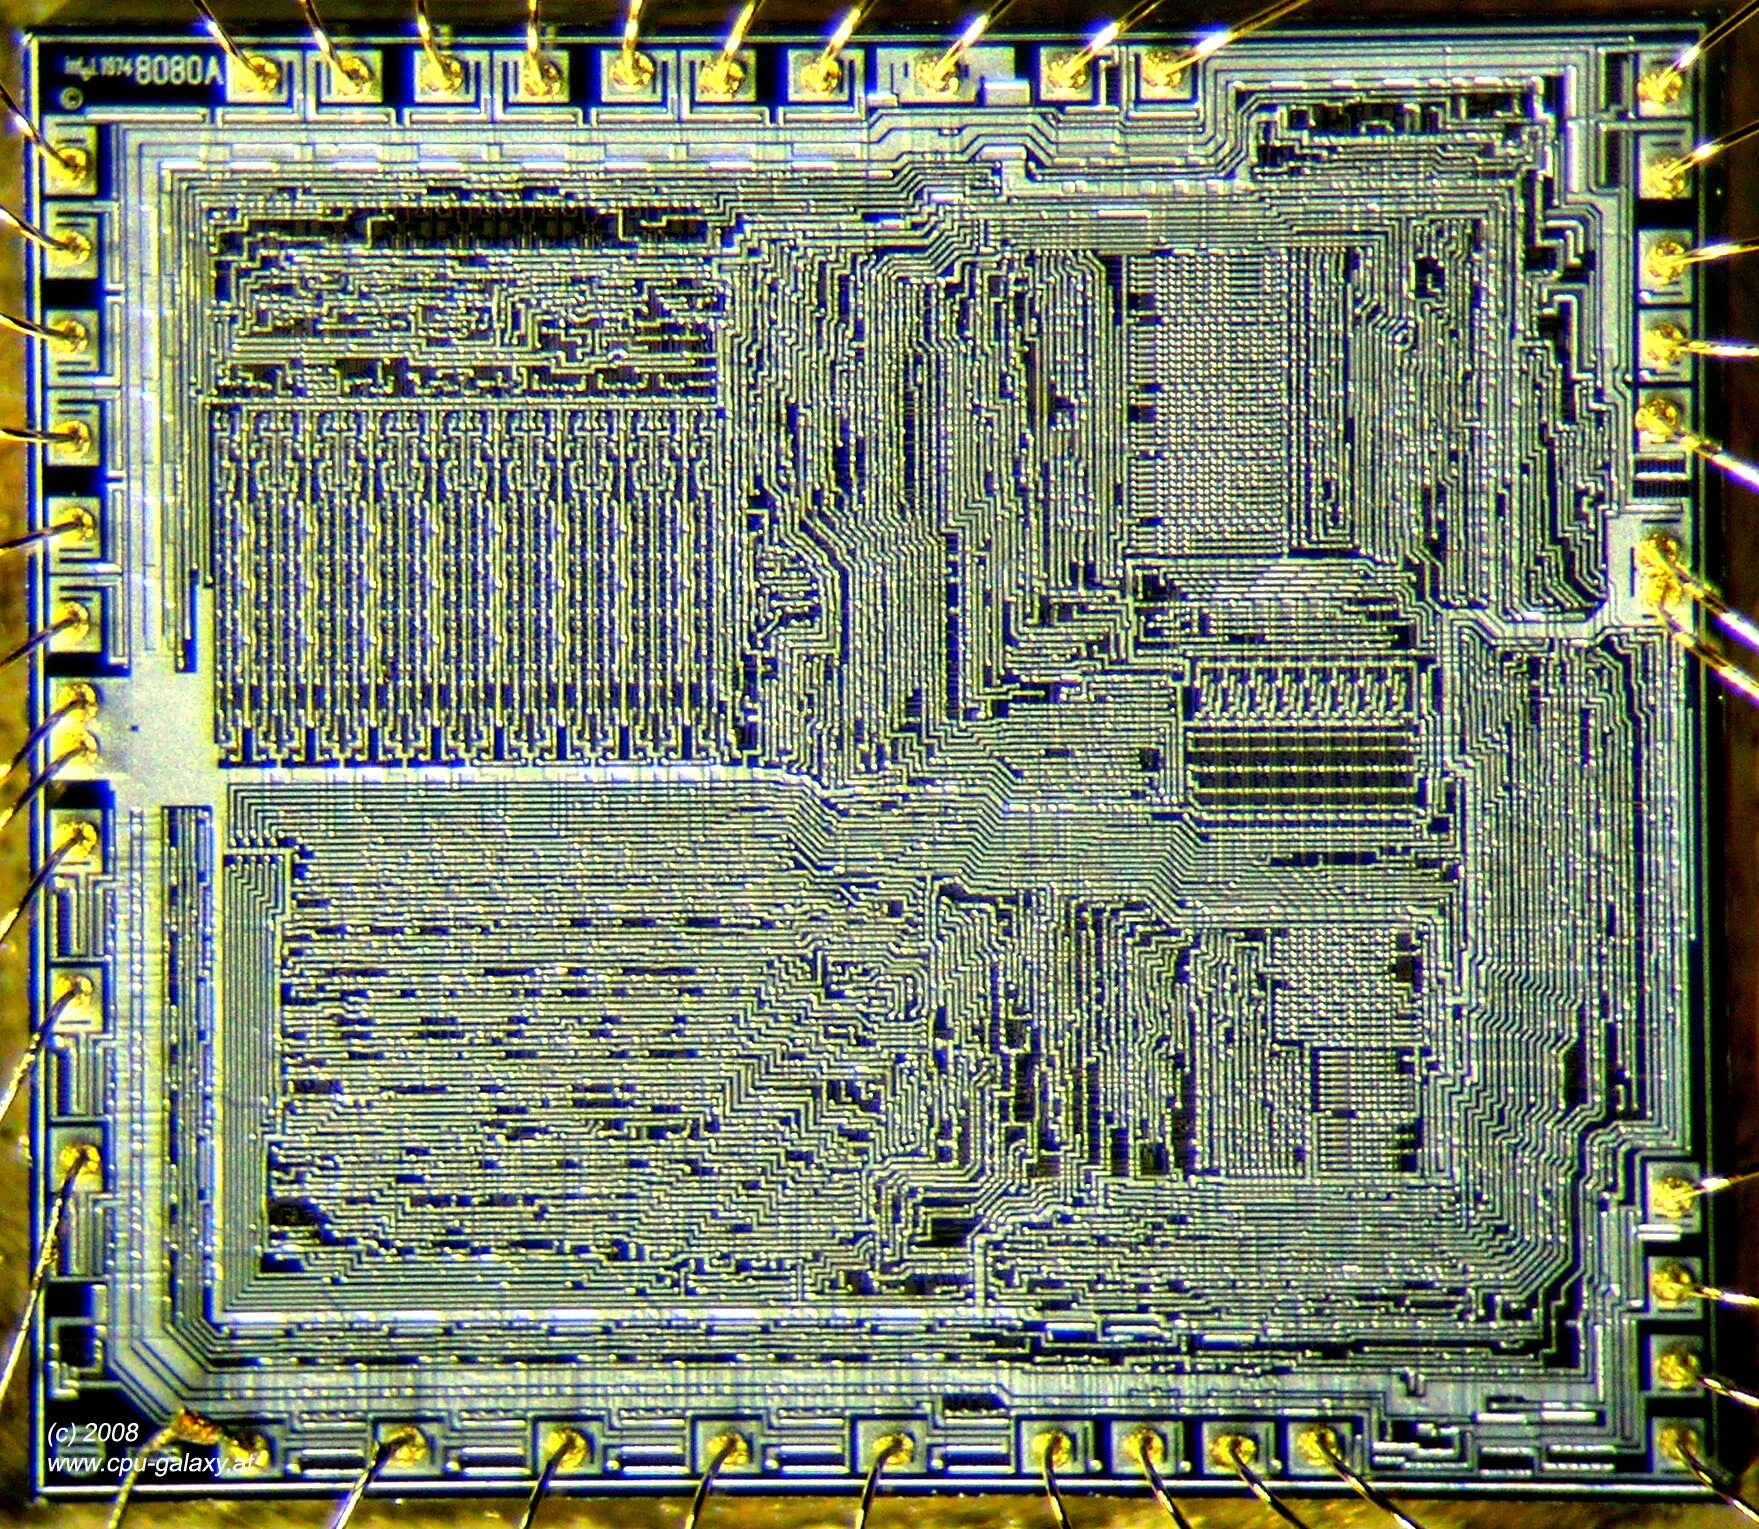 Микросхема под. Intel 8080 CPU. Микропроцессор 8080. Intel 8080 архитектура. Архитектура микропроцессора i8080.